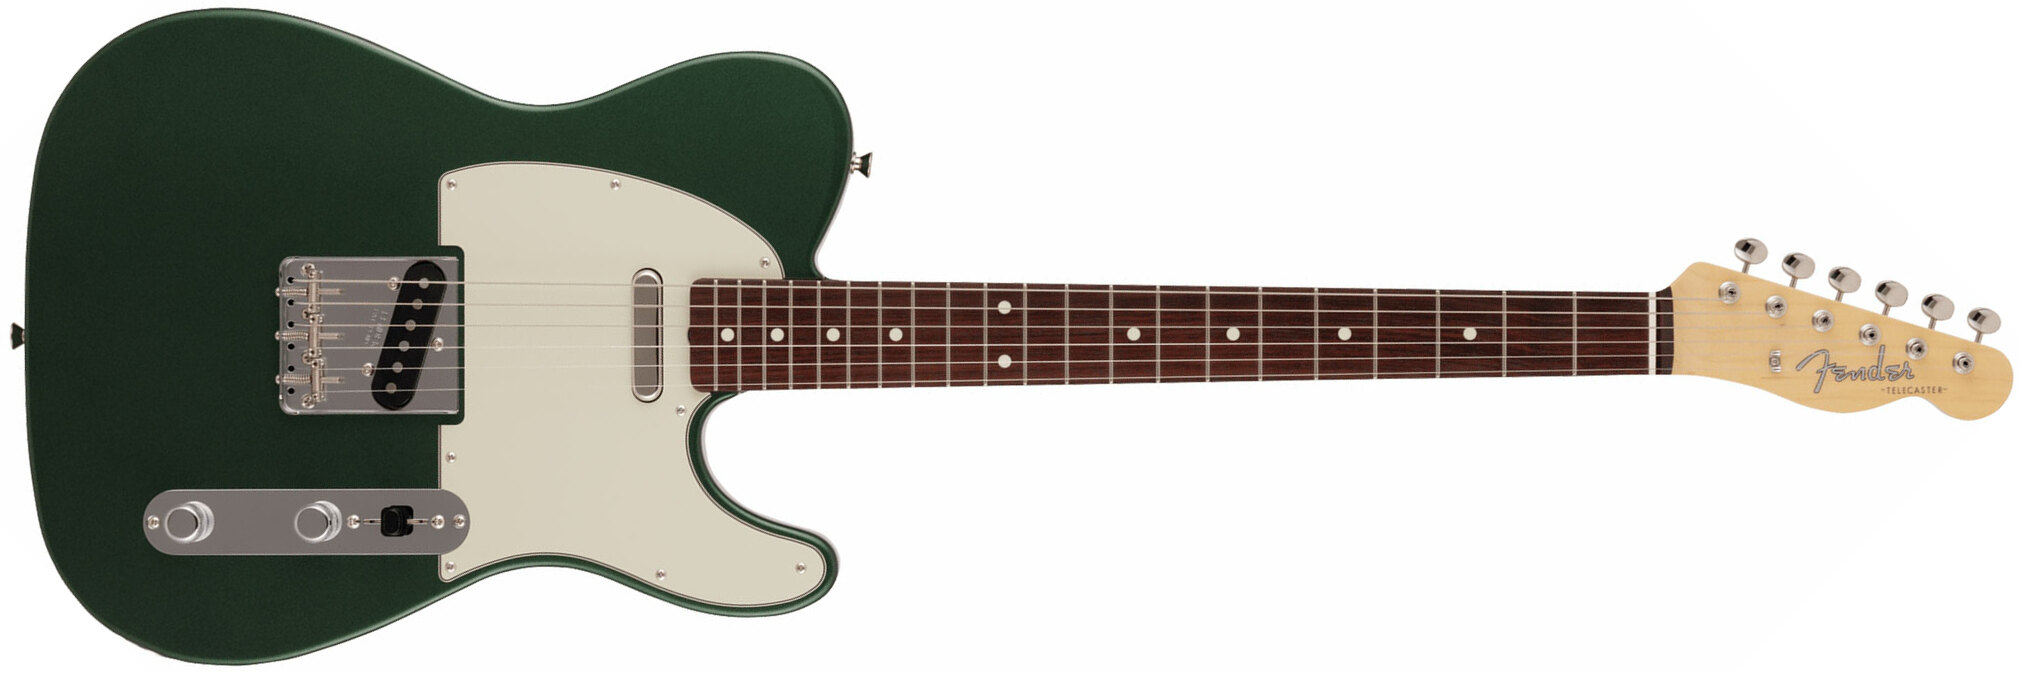 Fender Tele Traditional 60s Mij 2s Ht Rw - Aged Sherwood Green Metallic - Televorm elektrische gitaar - Main picture